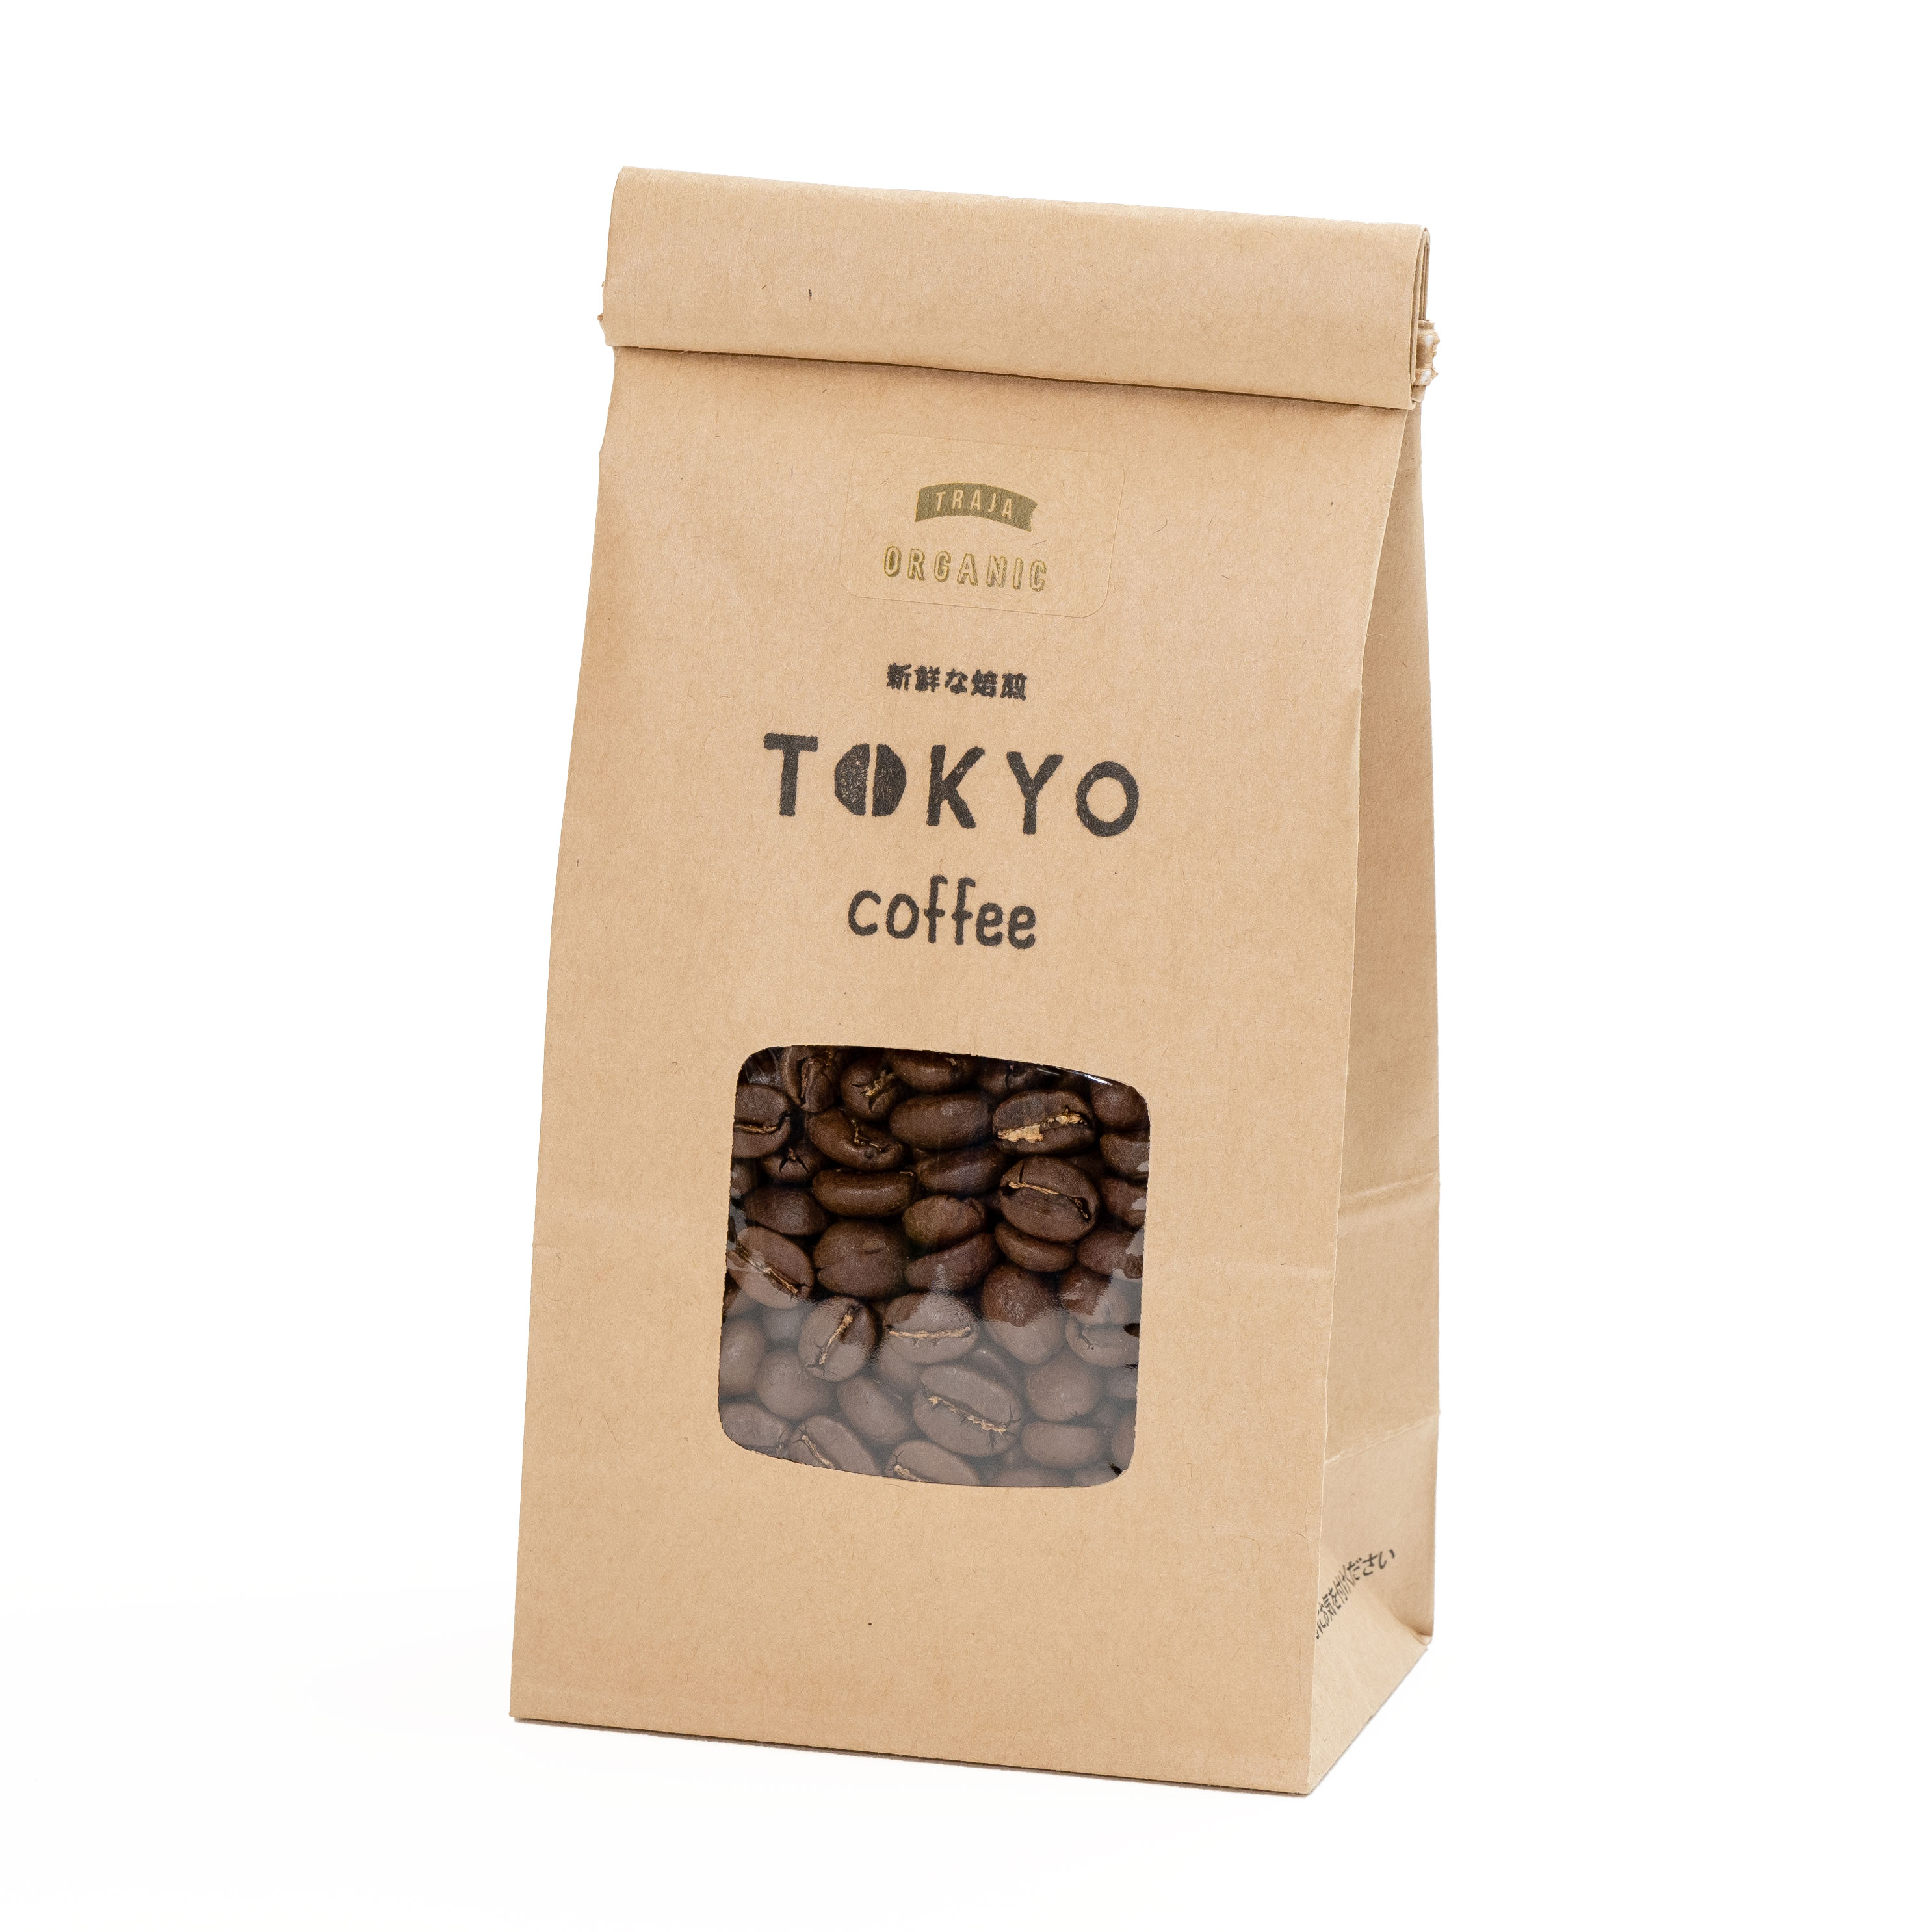 TOKYO COFFEE オーガニック コーヒー シングルオリジン トラジャ 200g  200gでコーヒー約14杯分｜トラジャオーガニック コーヒー 豆 有機コーヒー豆 トラジャコーヒー豆 トラジャ珈琲豆 有機珈琲 traja